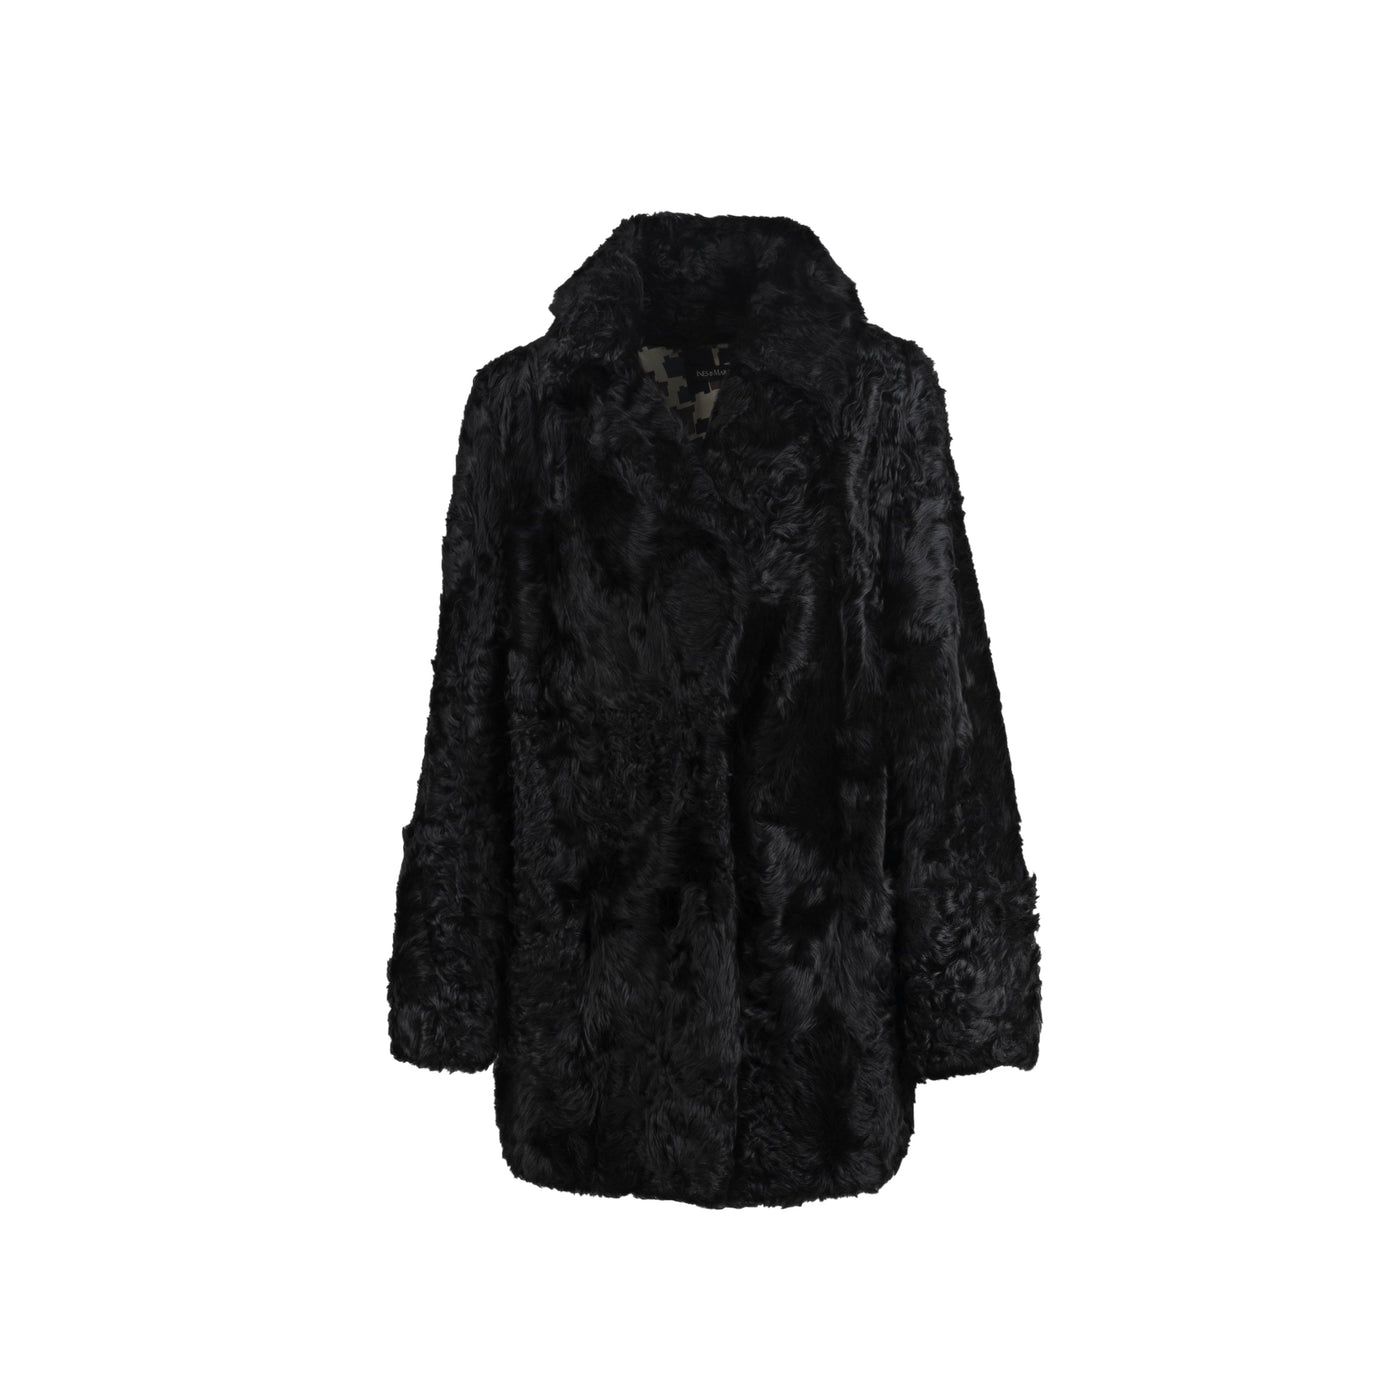 Inès & Maréchal astrakhan coat black fur NFT pre-owned